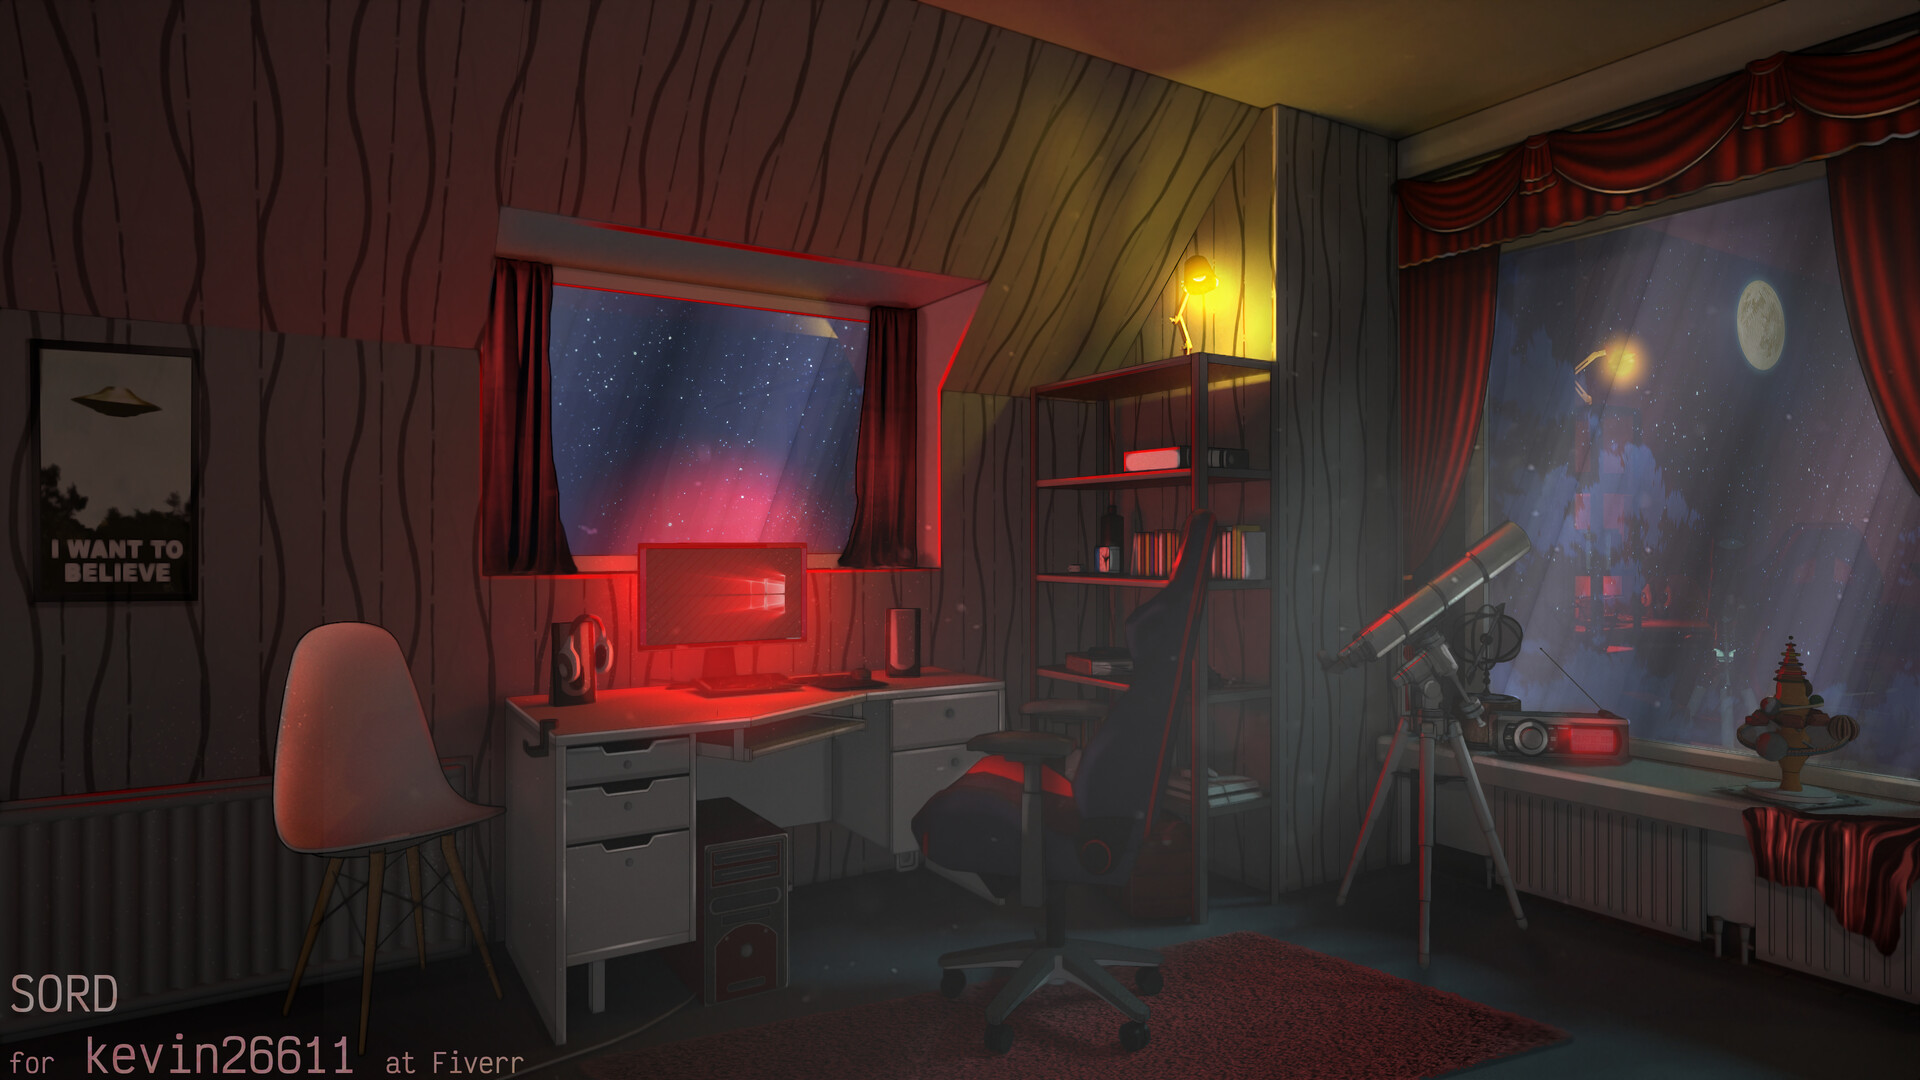 ArtStation - Anime / Visual novel background illustration - Gaming Room